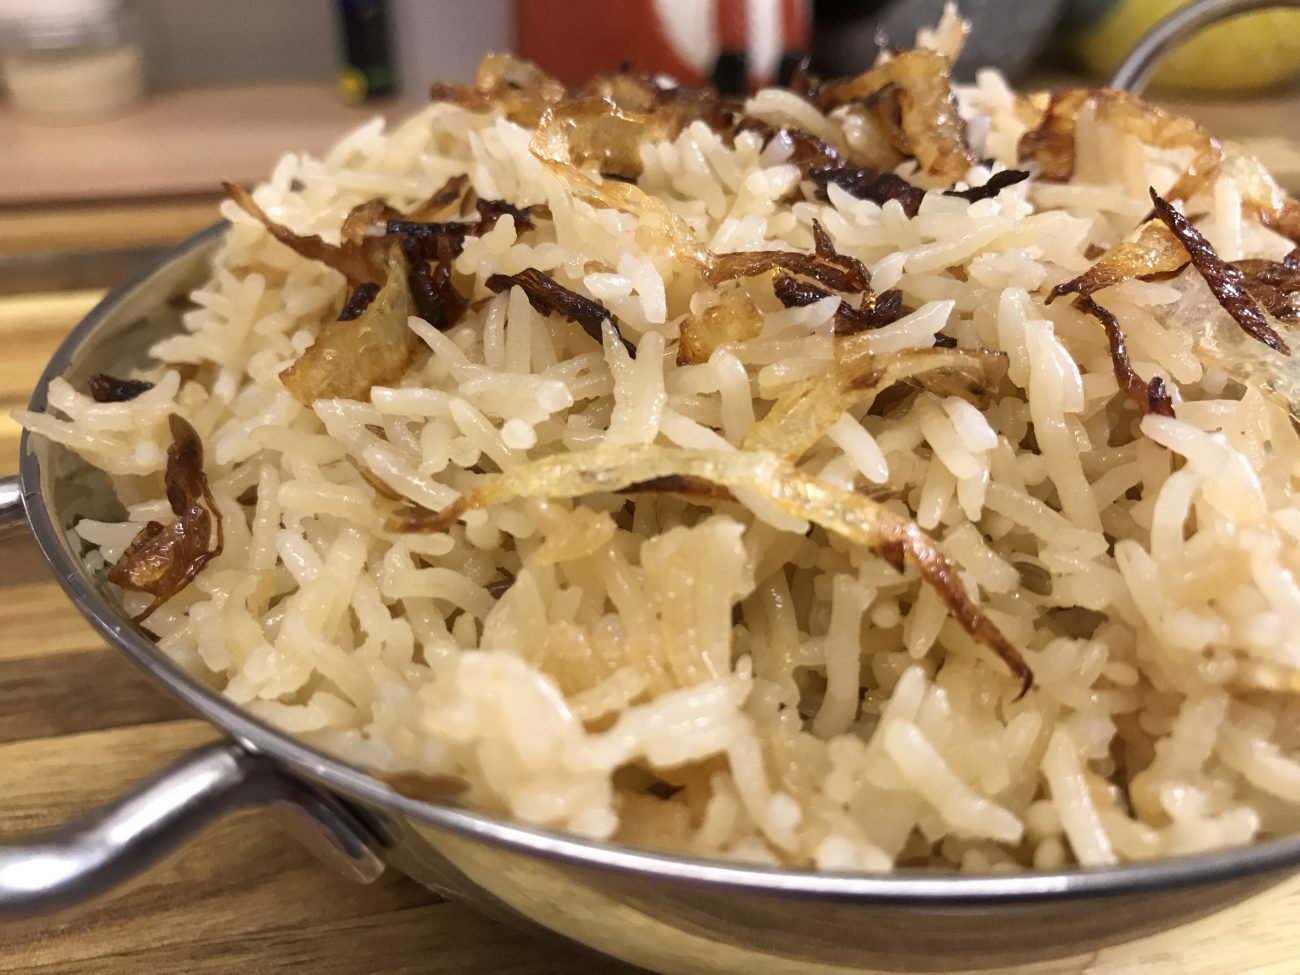 Caramelized onion rice